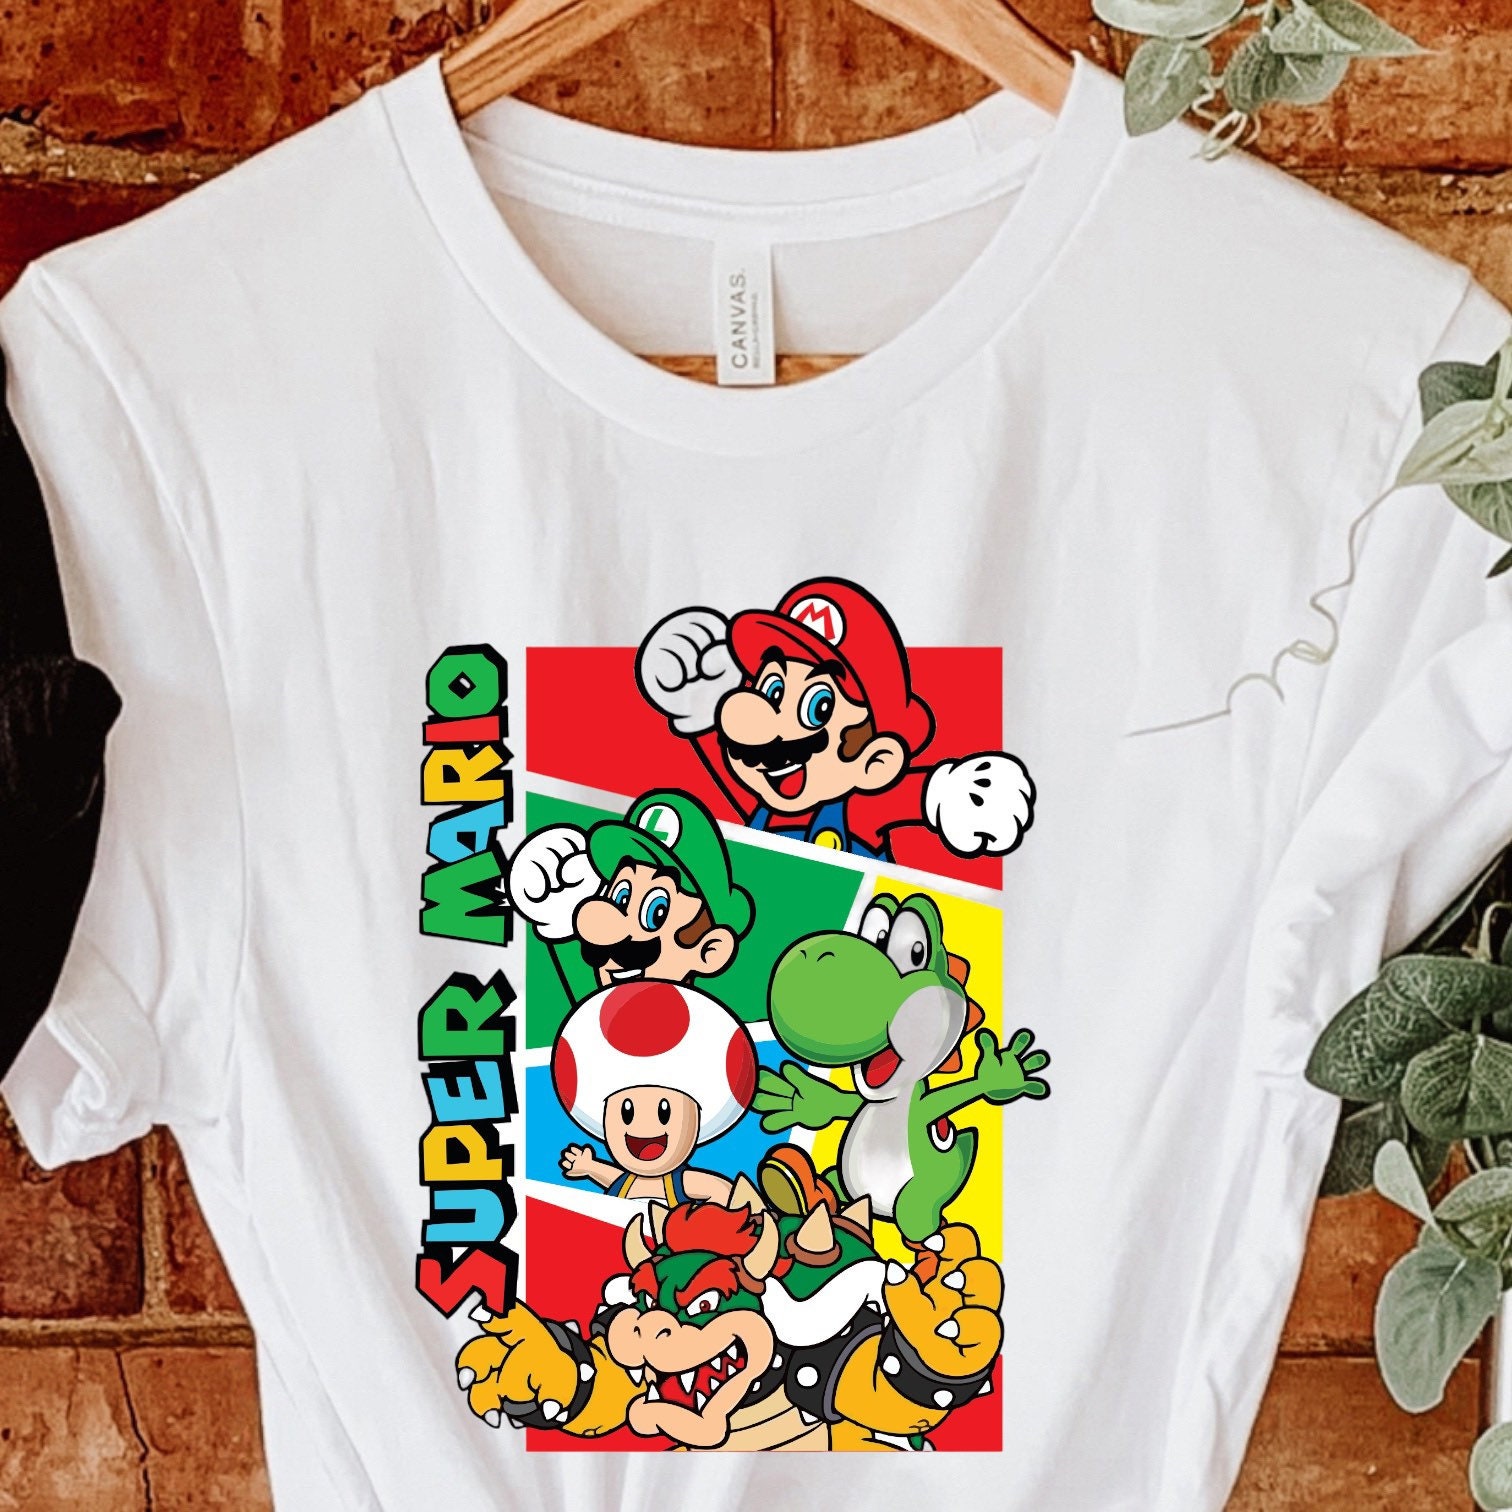 Papa Yoshi stuff! Always loved this dynamic with Yoshi and the Mario bros :  r/Mario